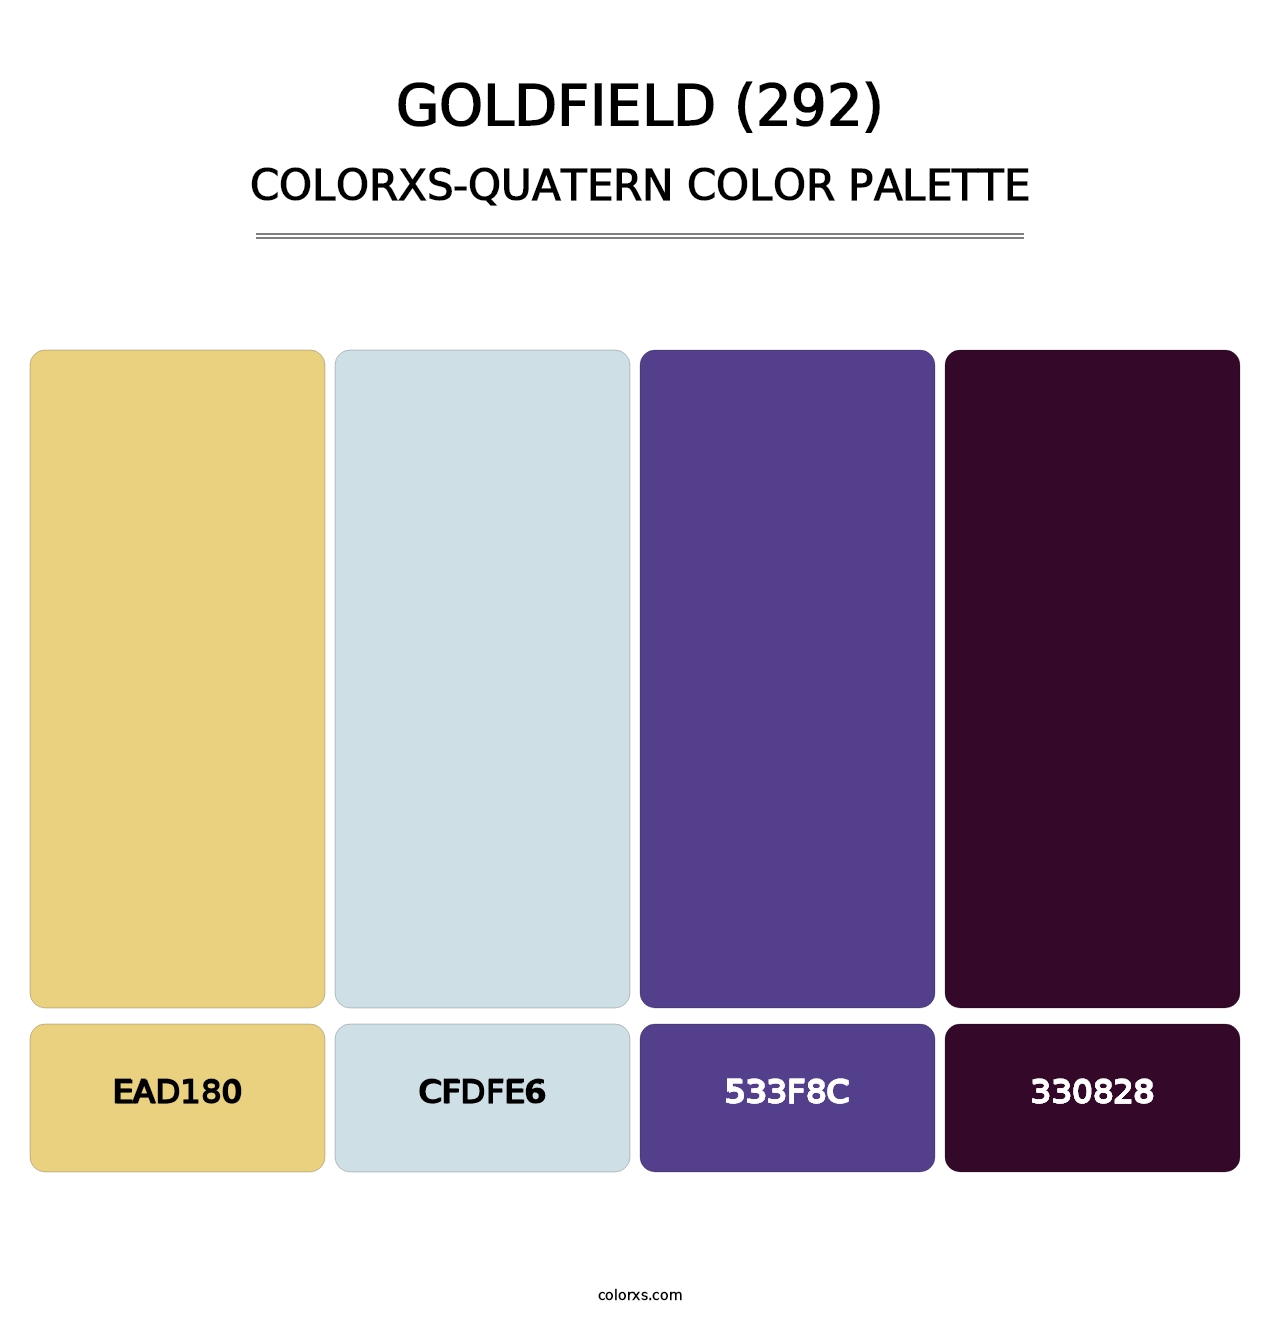 Goldfield (292) - Colorxs Quatern Palette